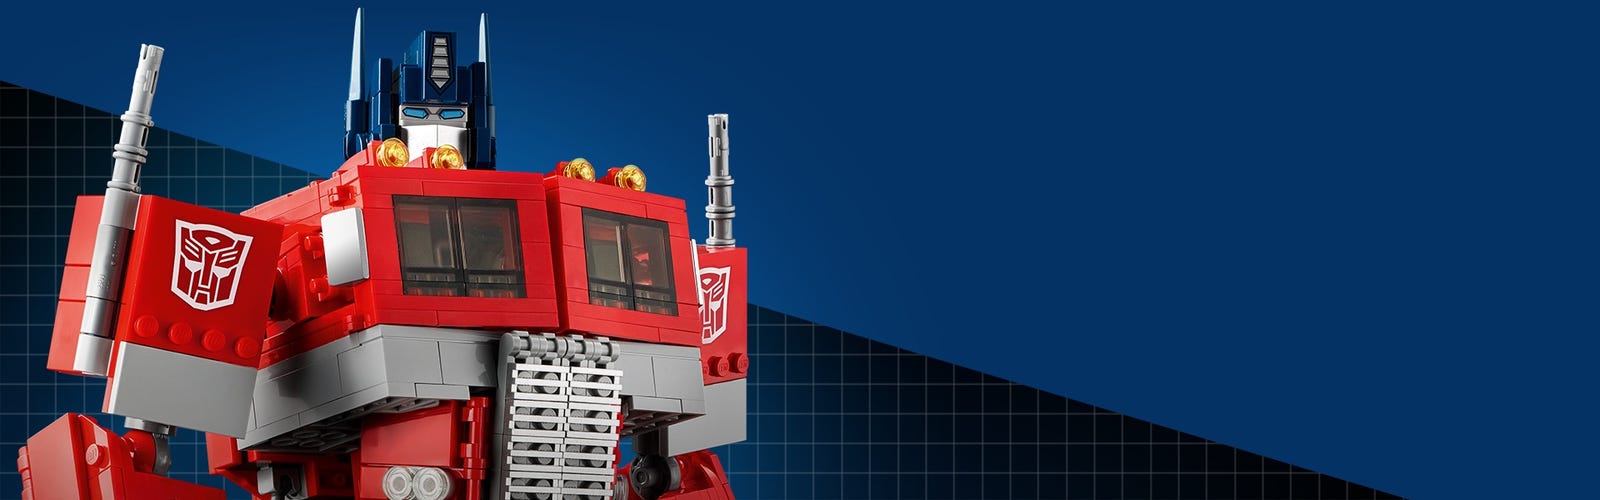 Transformers Optimus Prime Robots Technic 10302 Ideas Creator Series Truck  1508Pcs Building Blocks Kids Toy 77035 9956 10203 3328